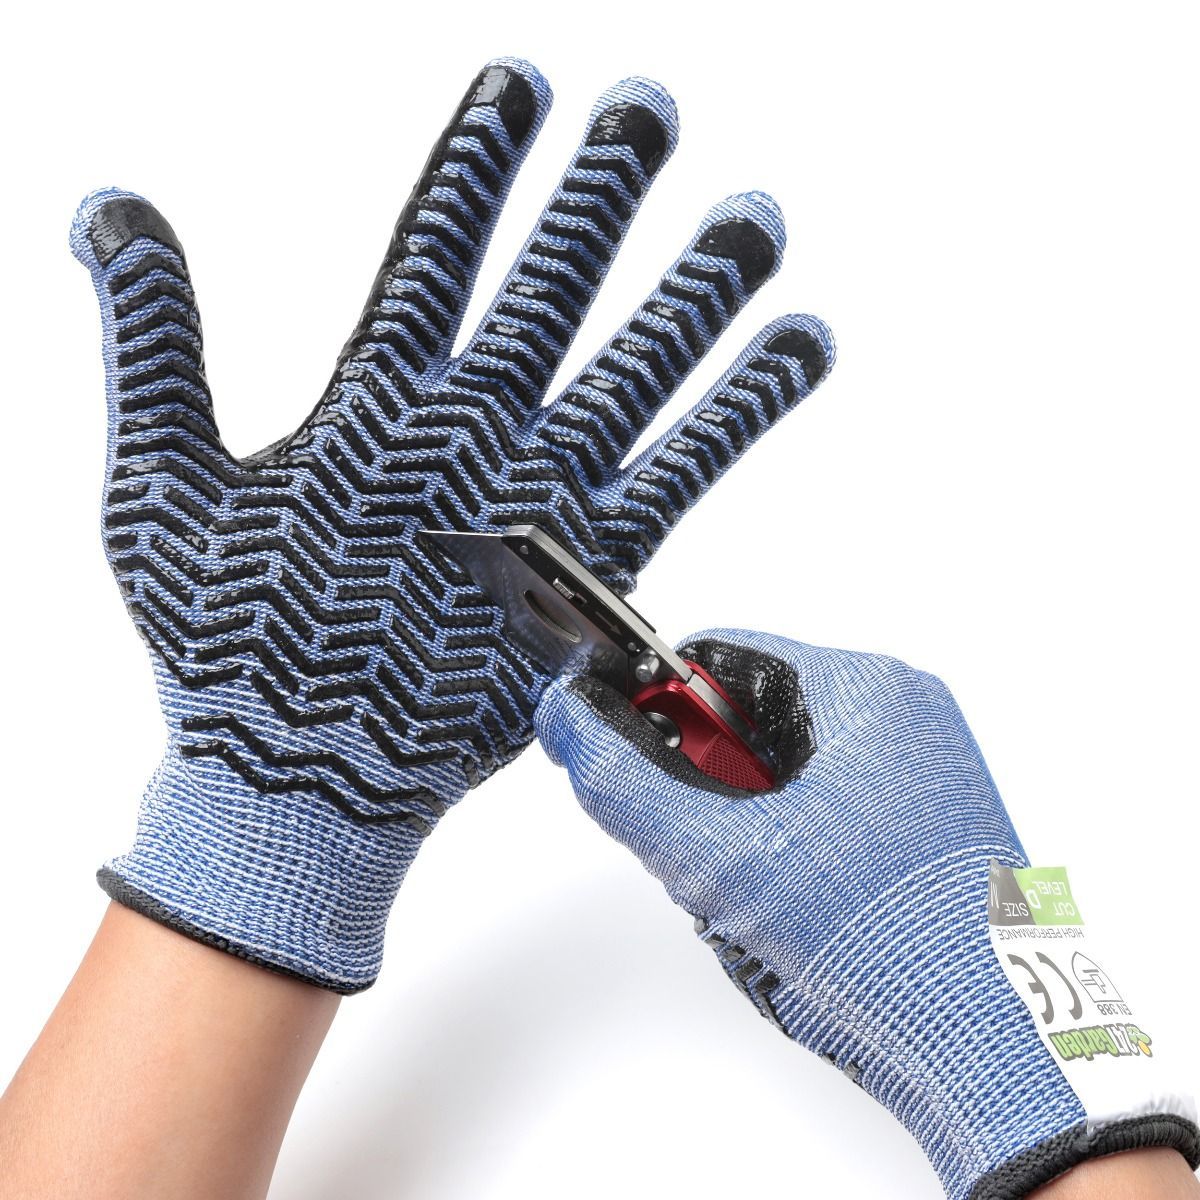 247Garden Level-D Cut-Resistant Stainless Steel-Wire Gardening+Working  Gloves w/Grips (X-Large Pair)